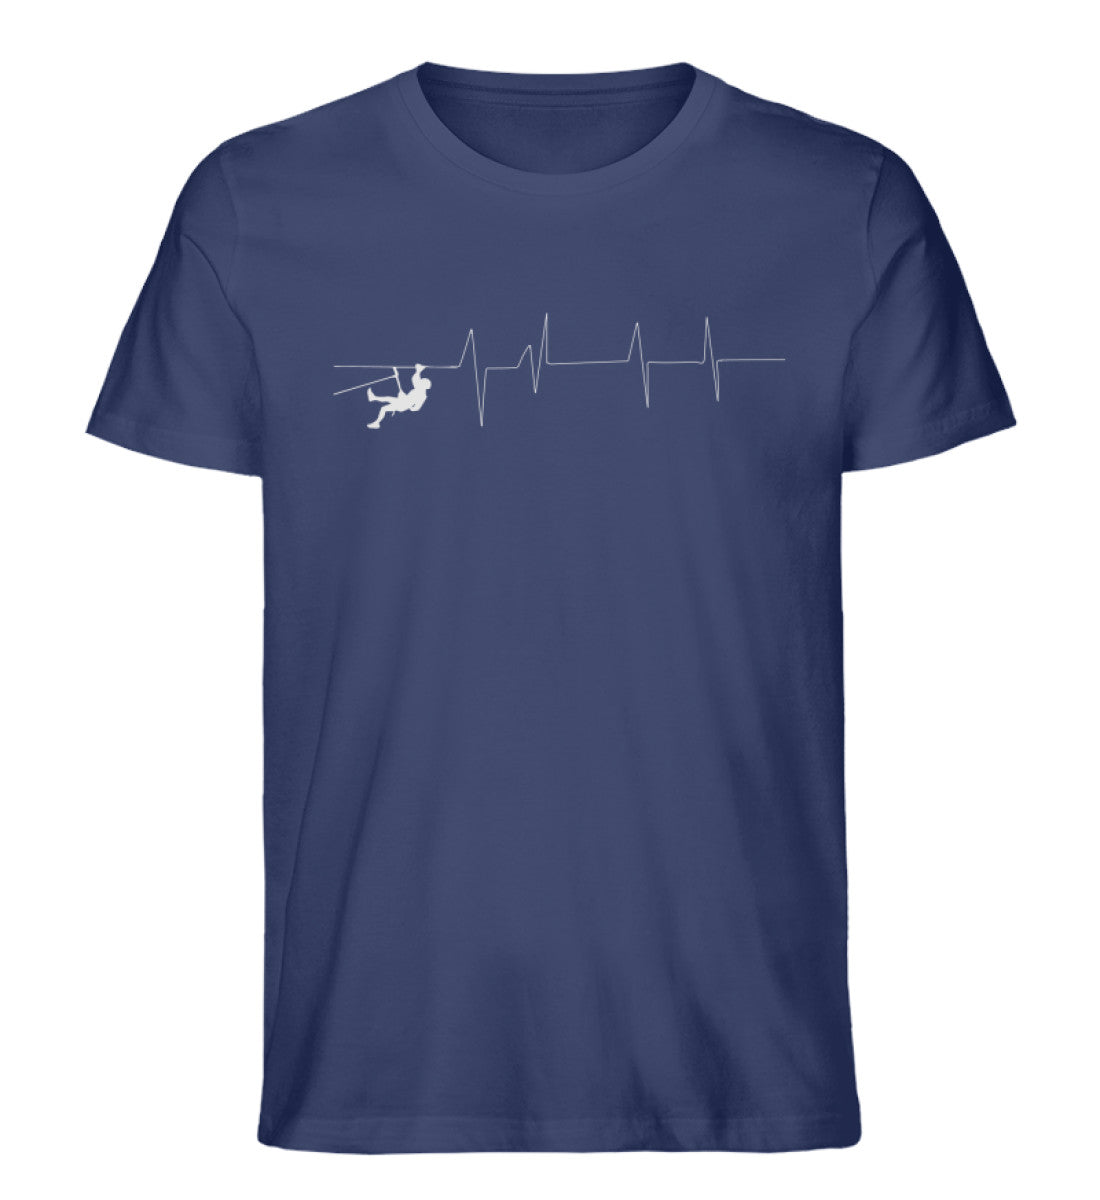 Herzschlag Klettern - Herren Organic T-Shirt klettern Navyblau